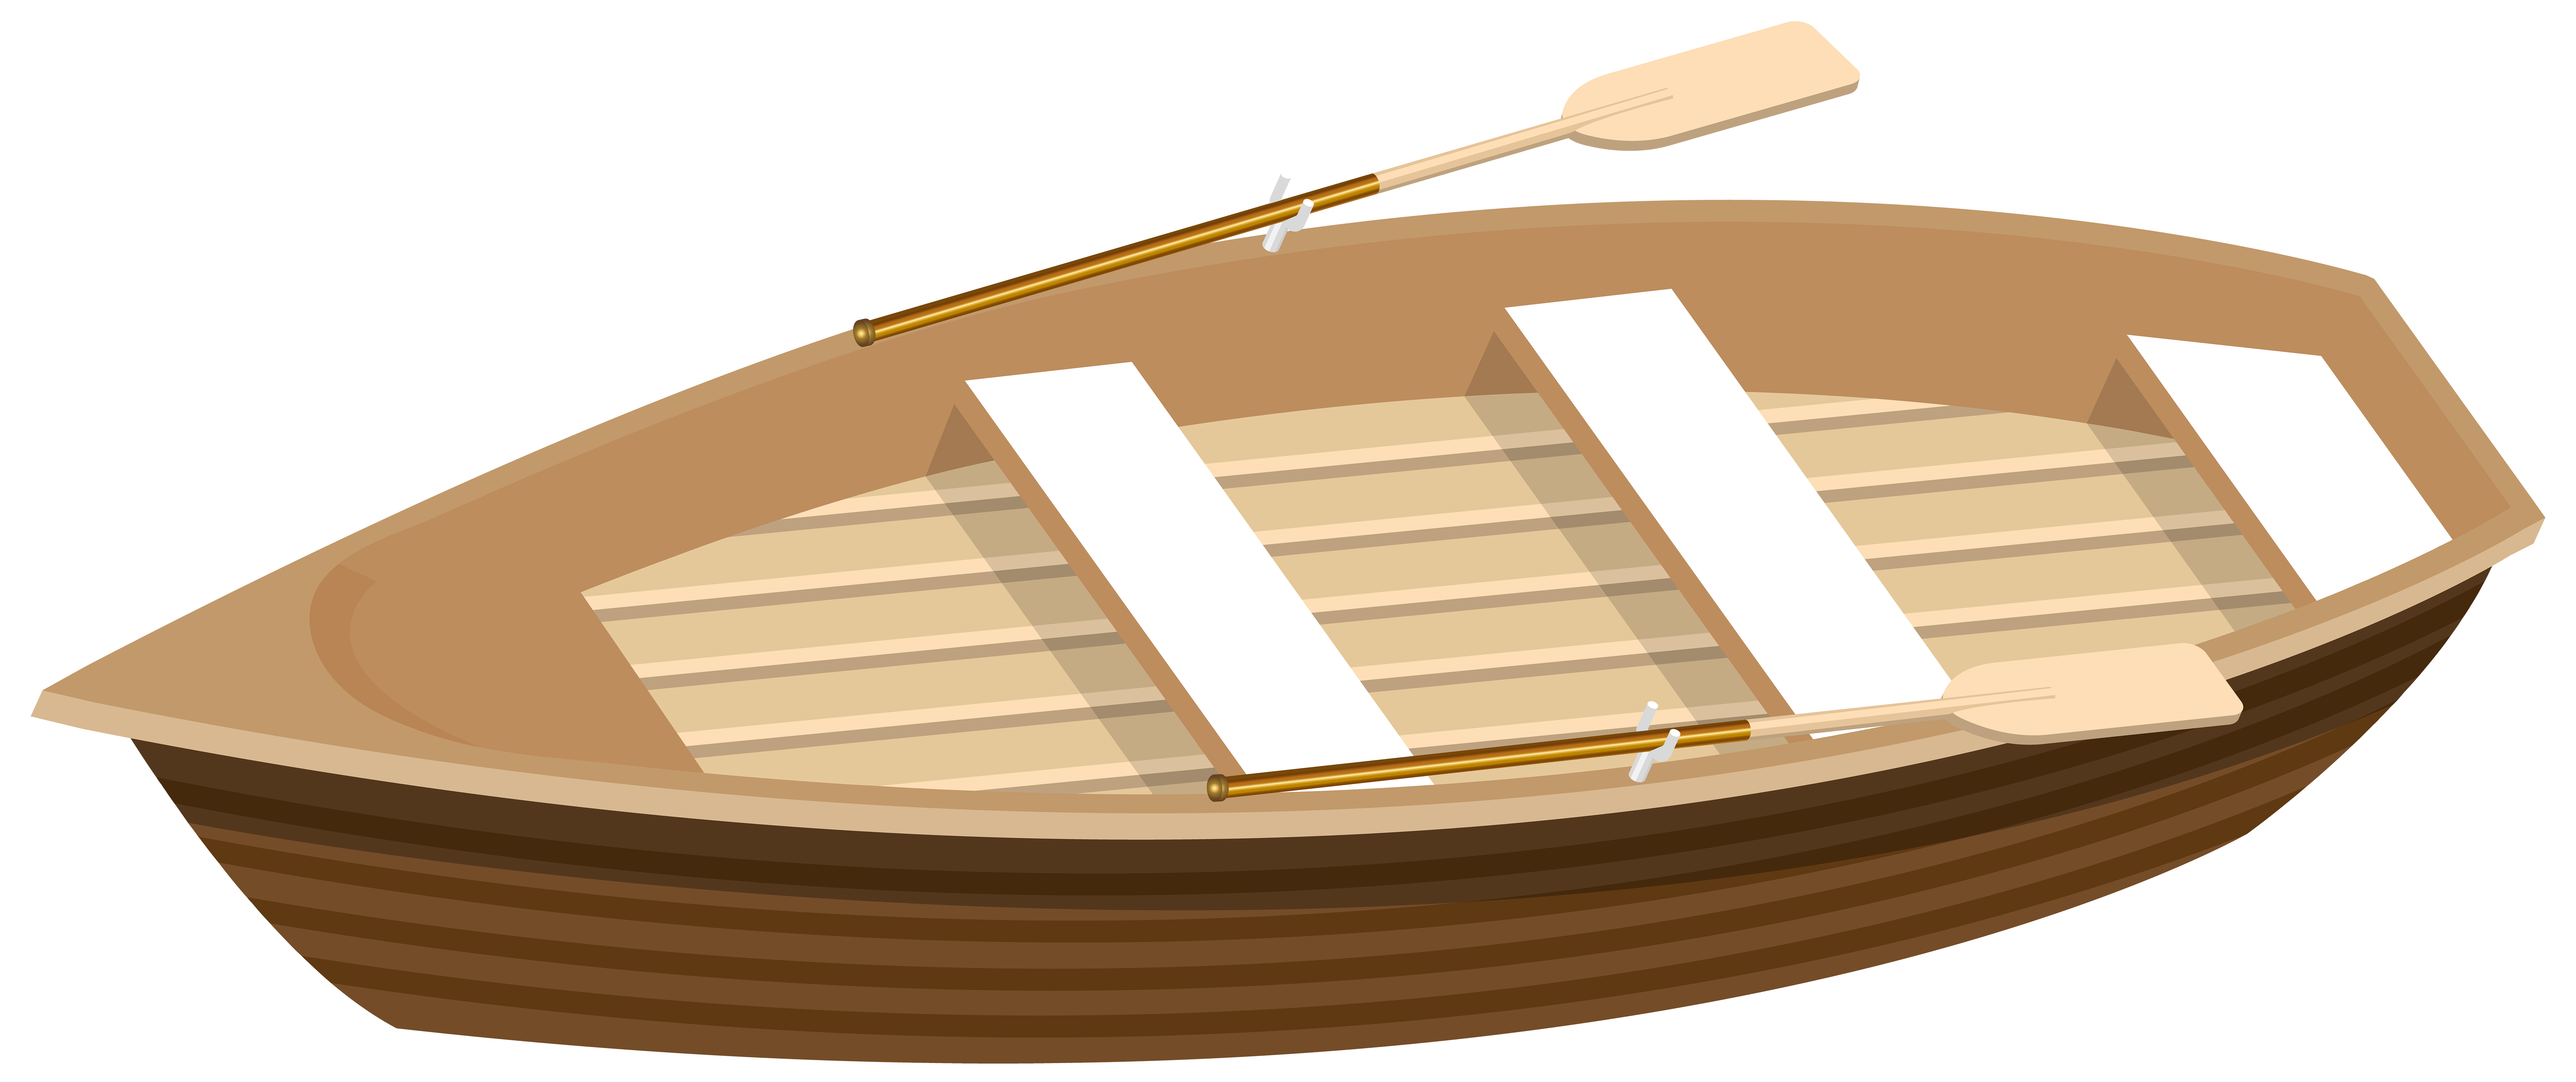 Wooden boat transparent.